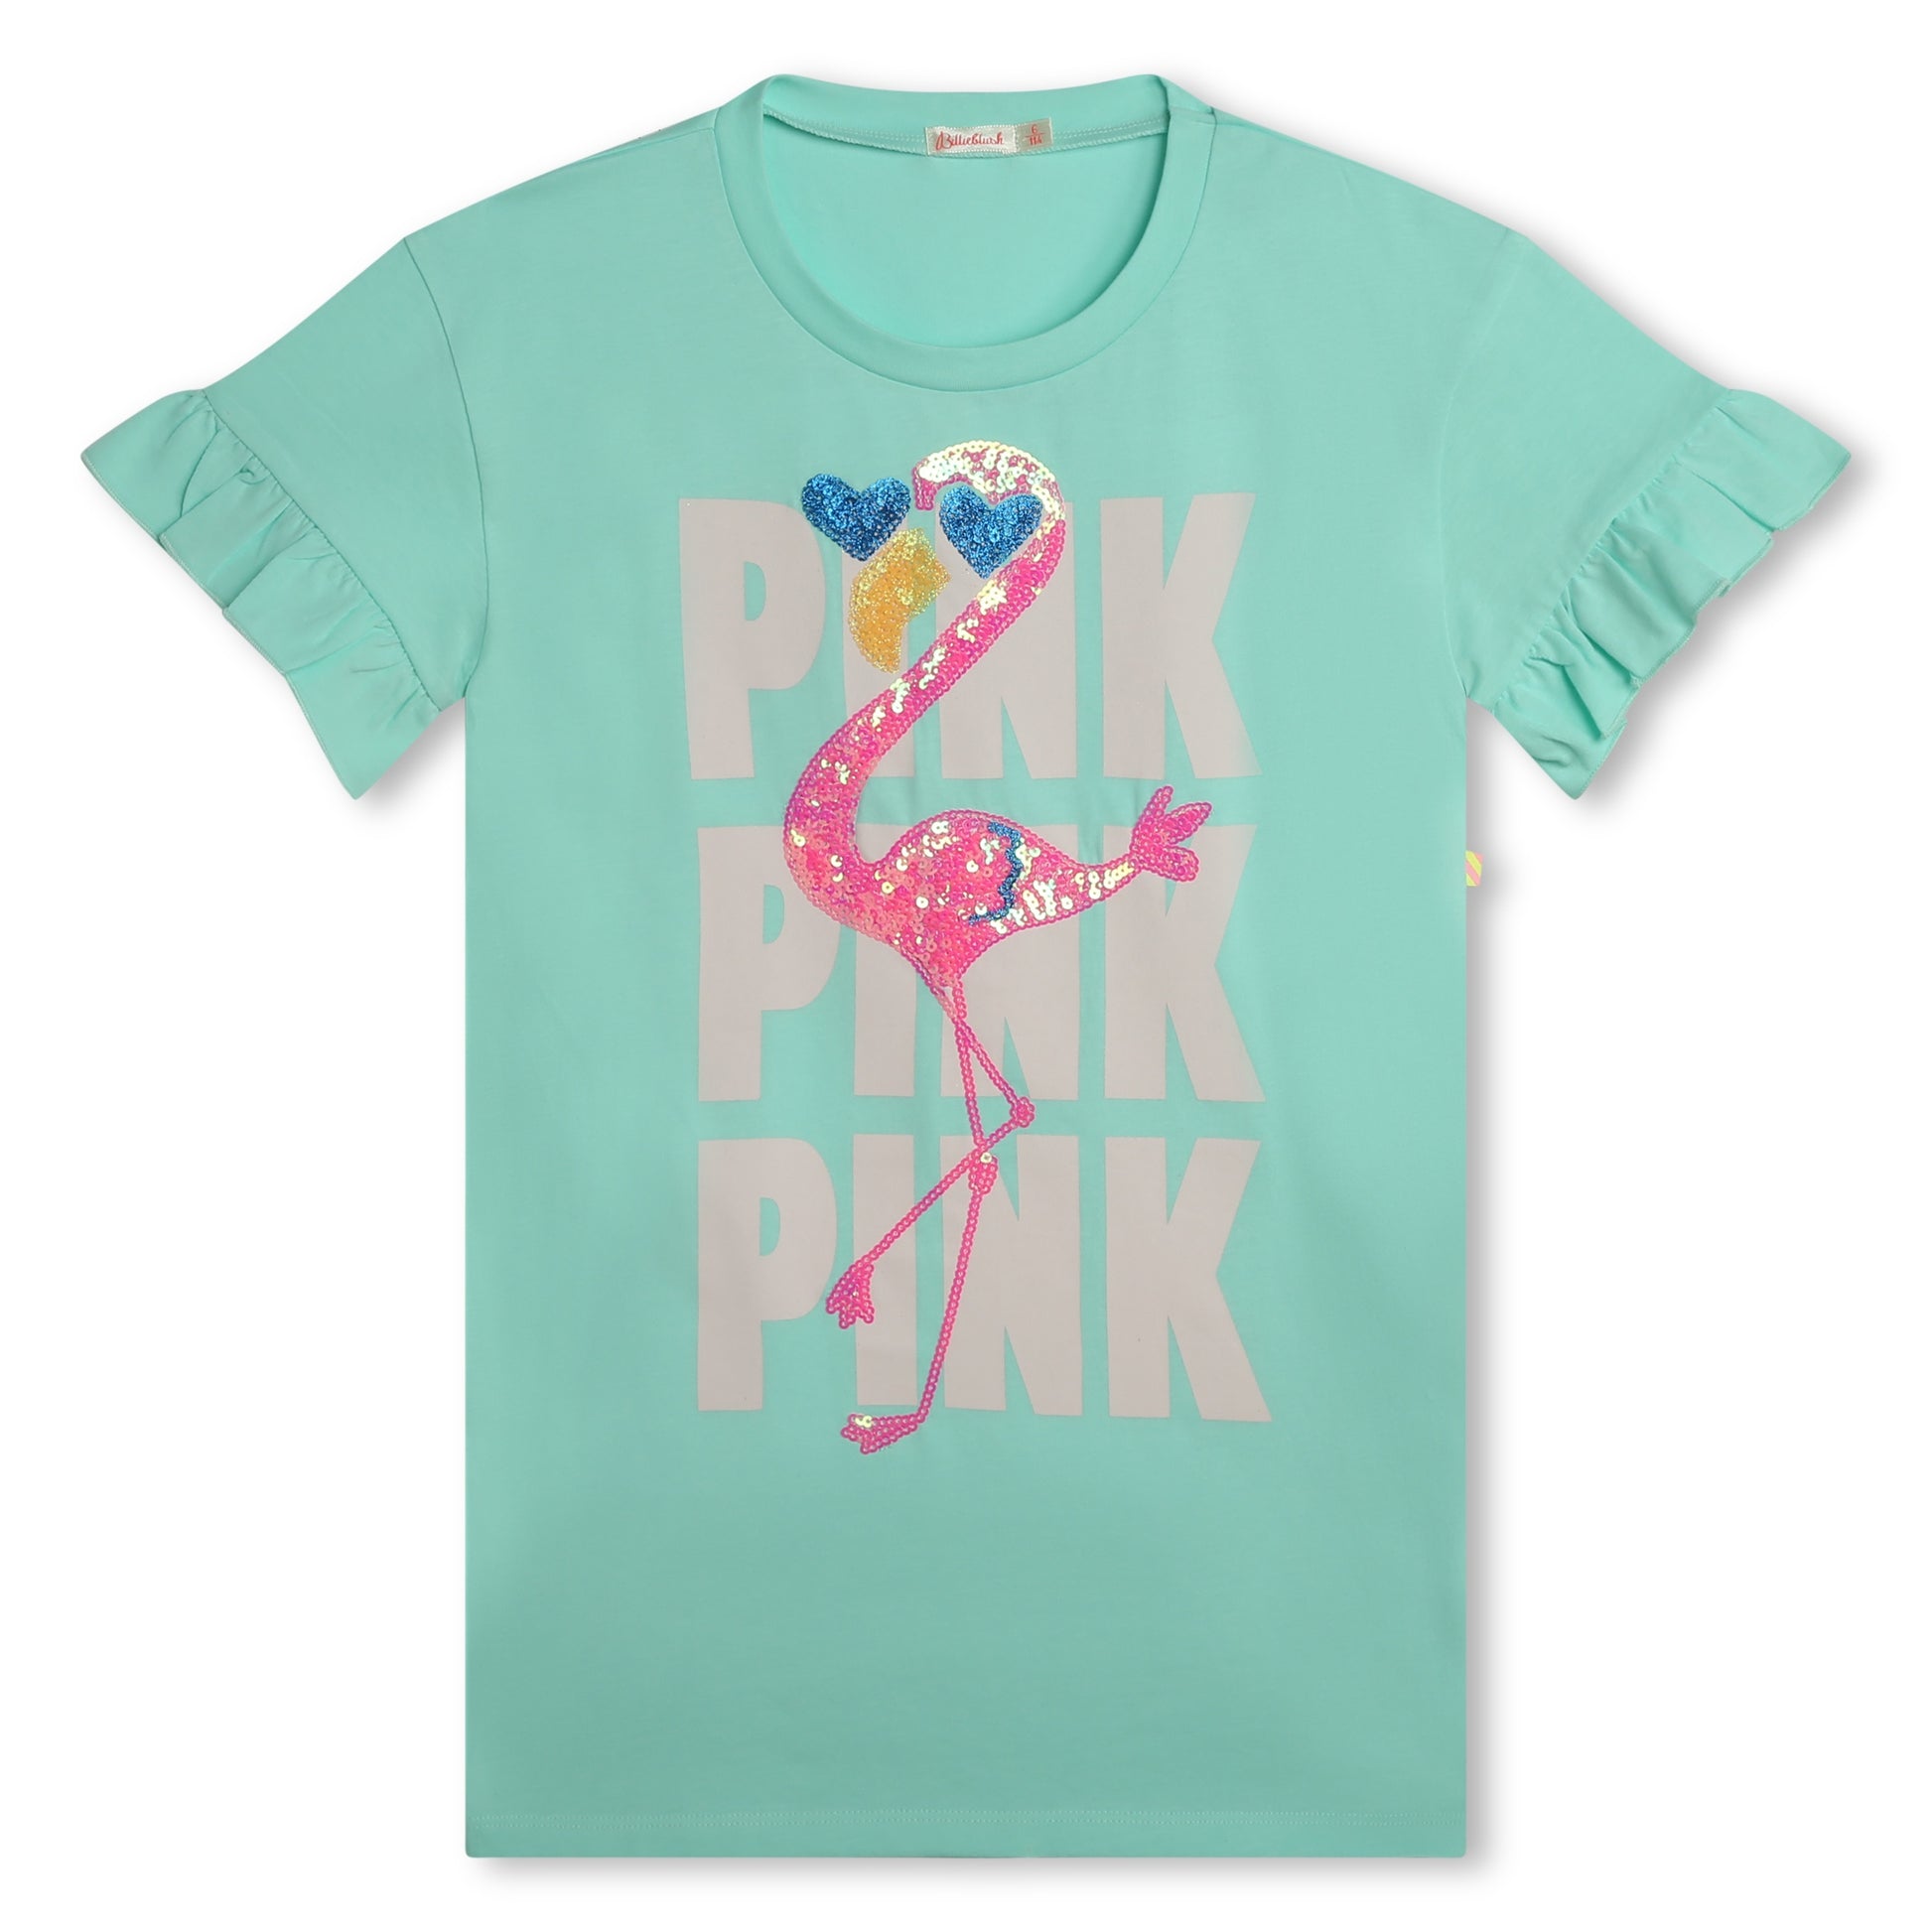 Billieblush, Dress, Billieblush - Dress, Aqua Billieblush Aqua T-Shirt dress  Ruffle sleeves  Pink sequin flamingo on front  U20186/74A  100% cotton   Machine washable 30*